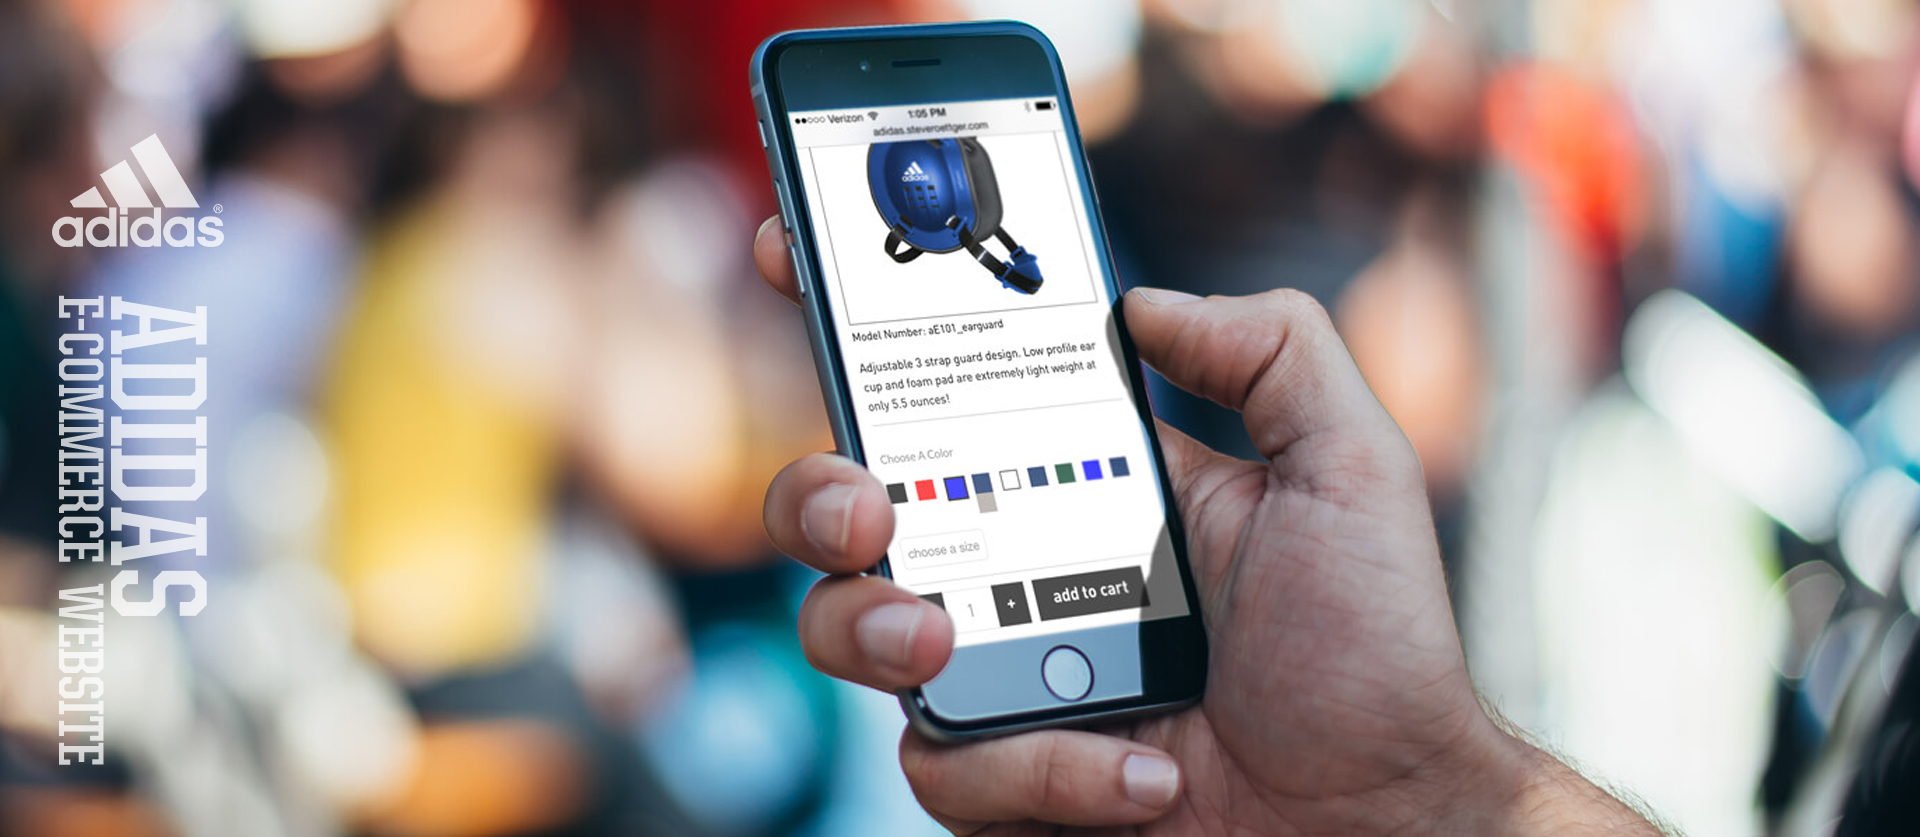 e-commerce responsive website design for adidas